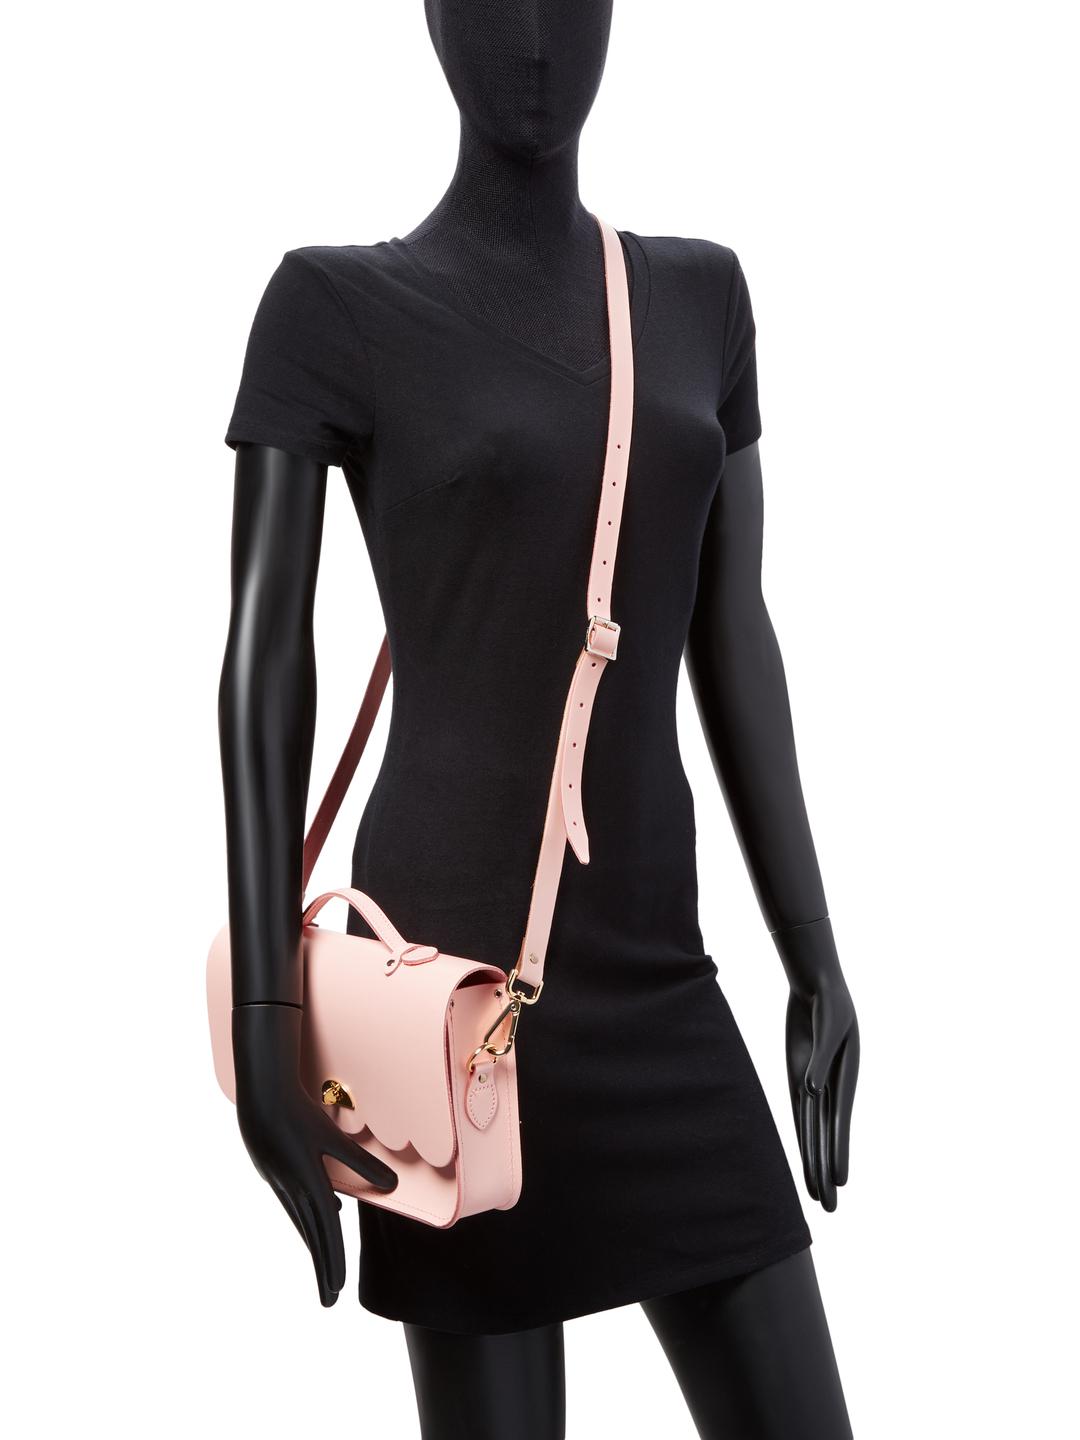 New Cambridge Satchel Company Women's Solid Cloud Seashell Pink Leather Bag